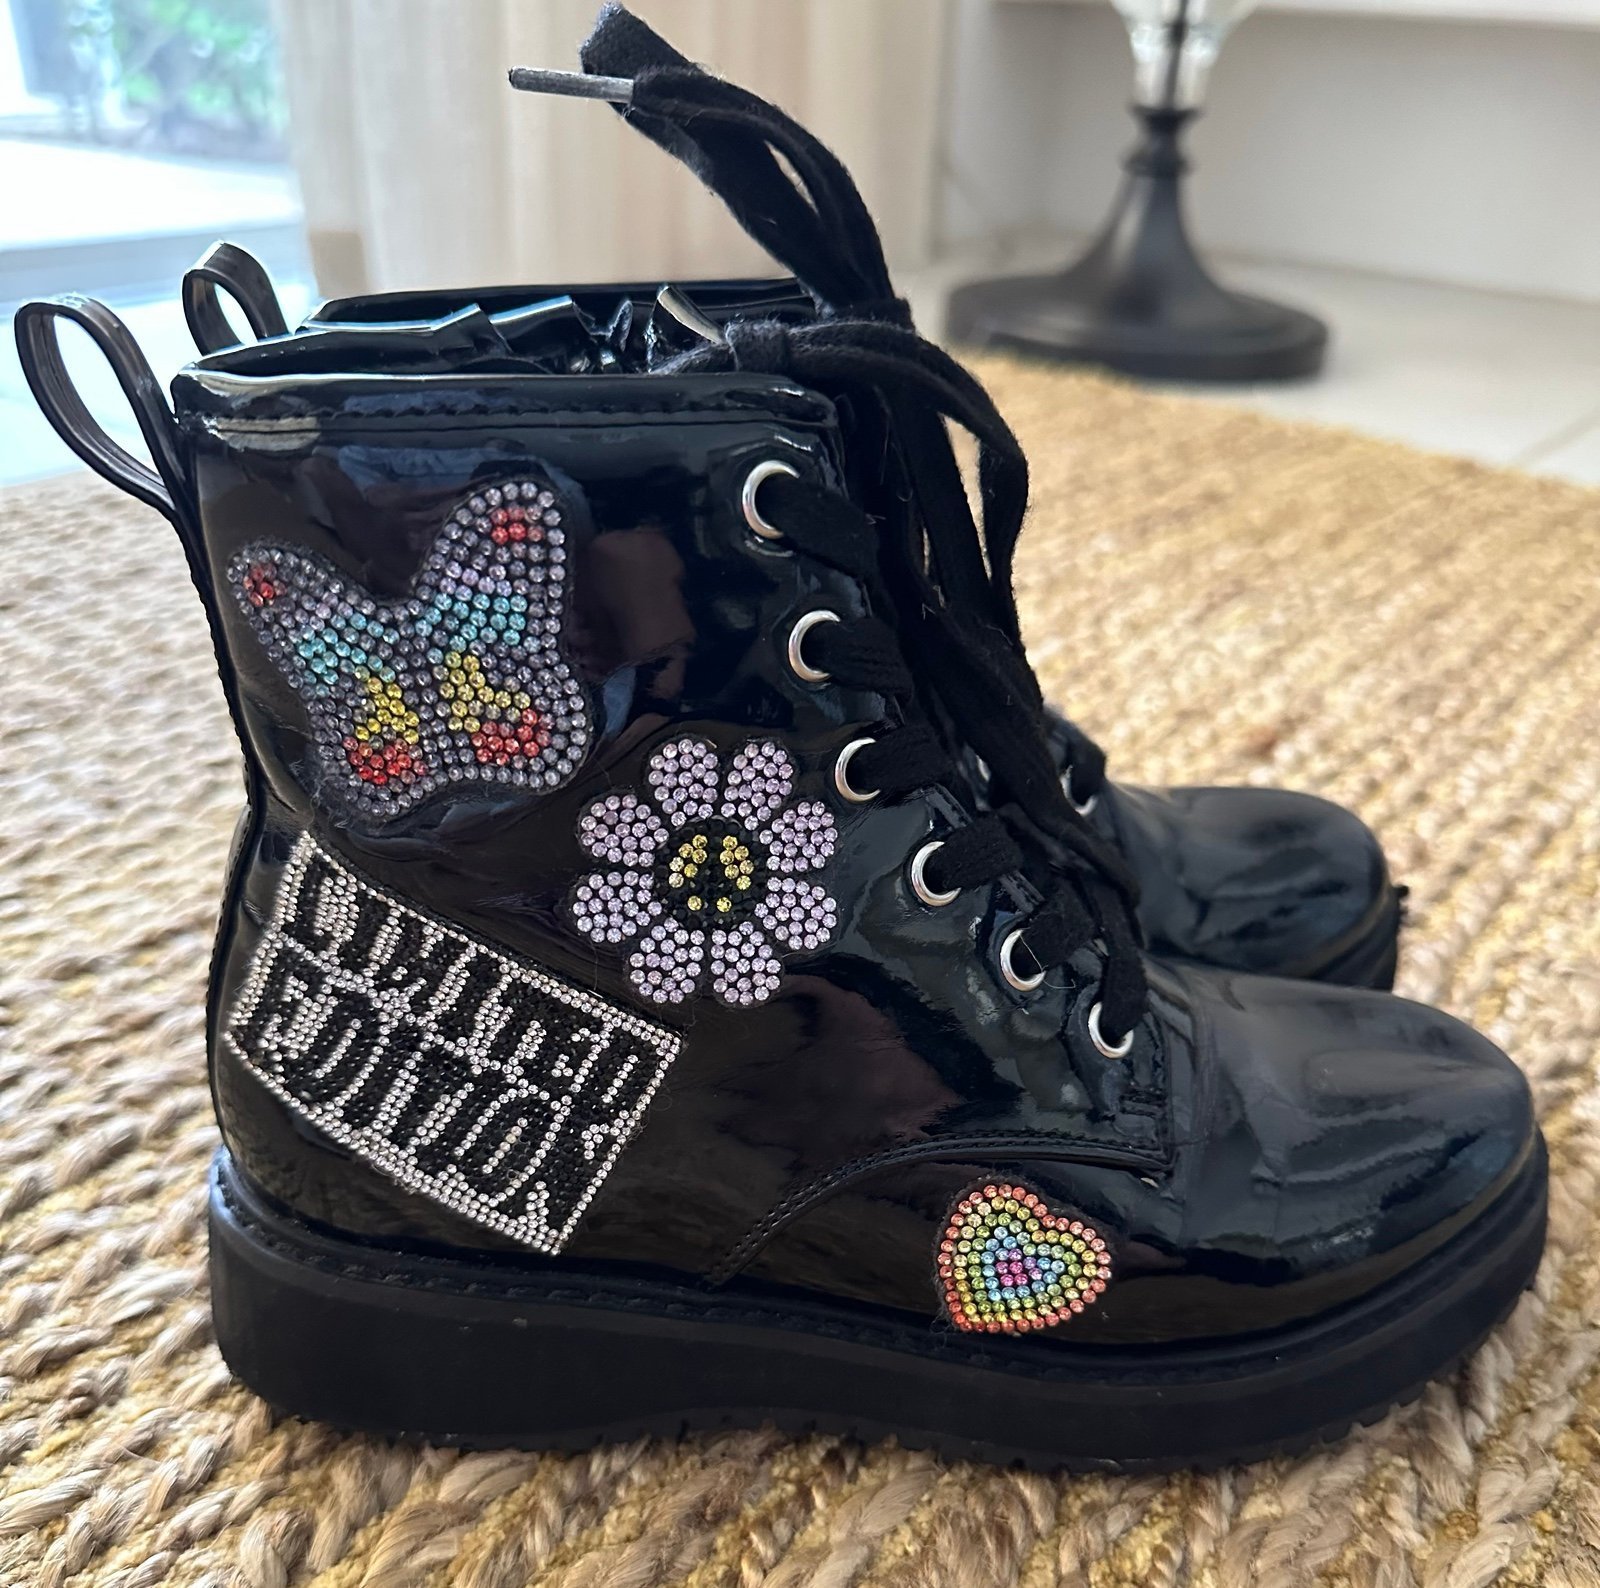 Steve Madden Girls Kudos Black Patent Lace Up Boots Size (1M) Super Cute! B1gvSRuwf